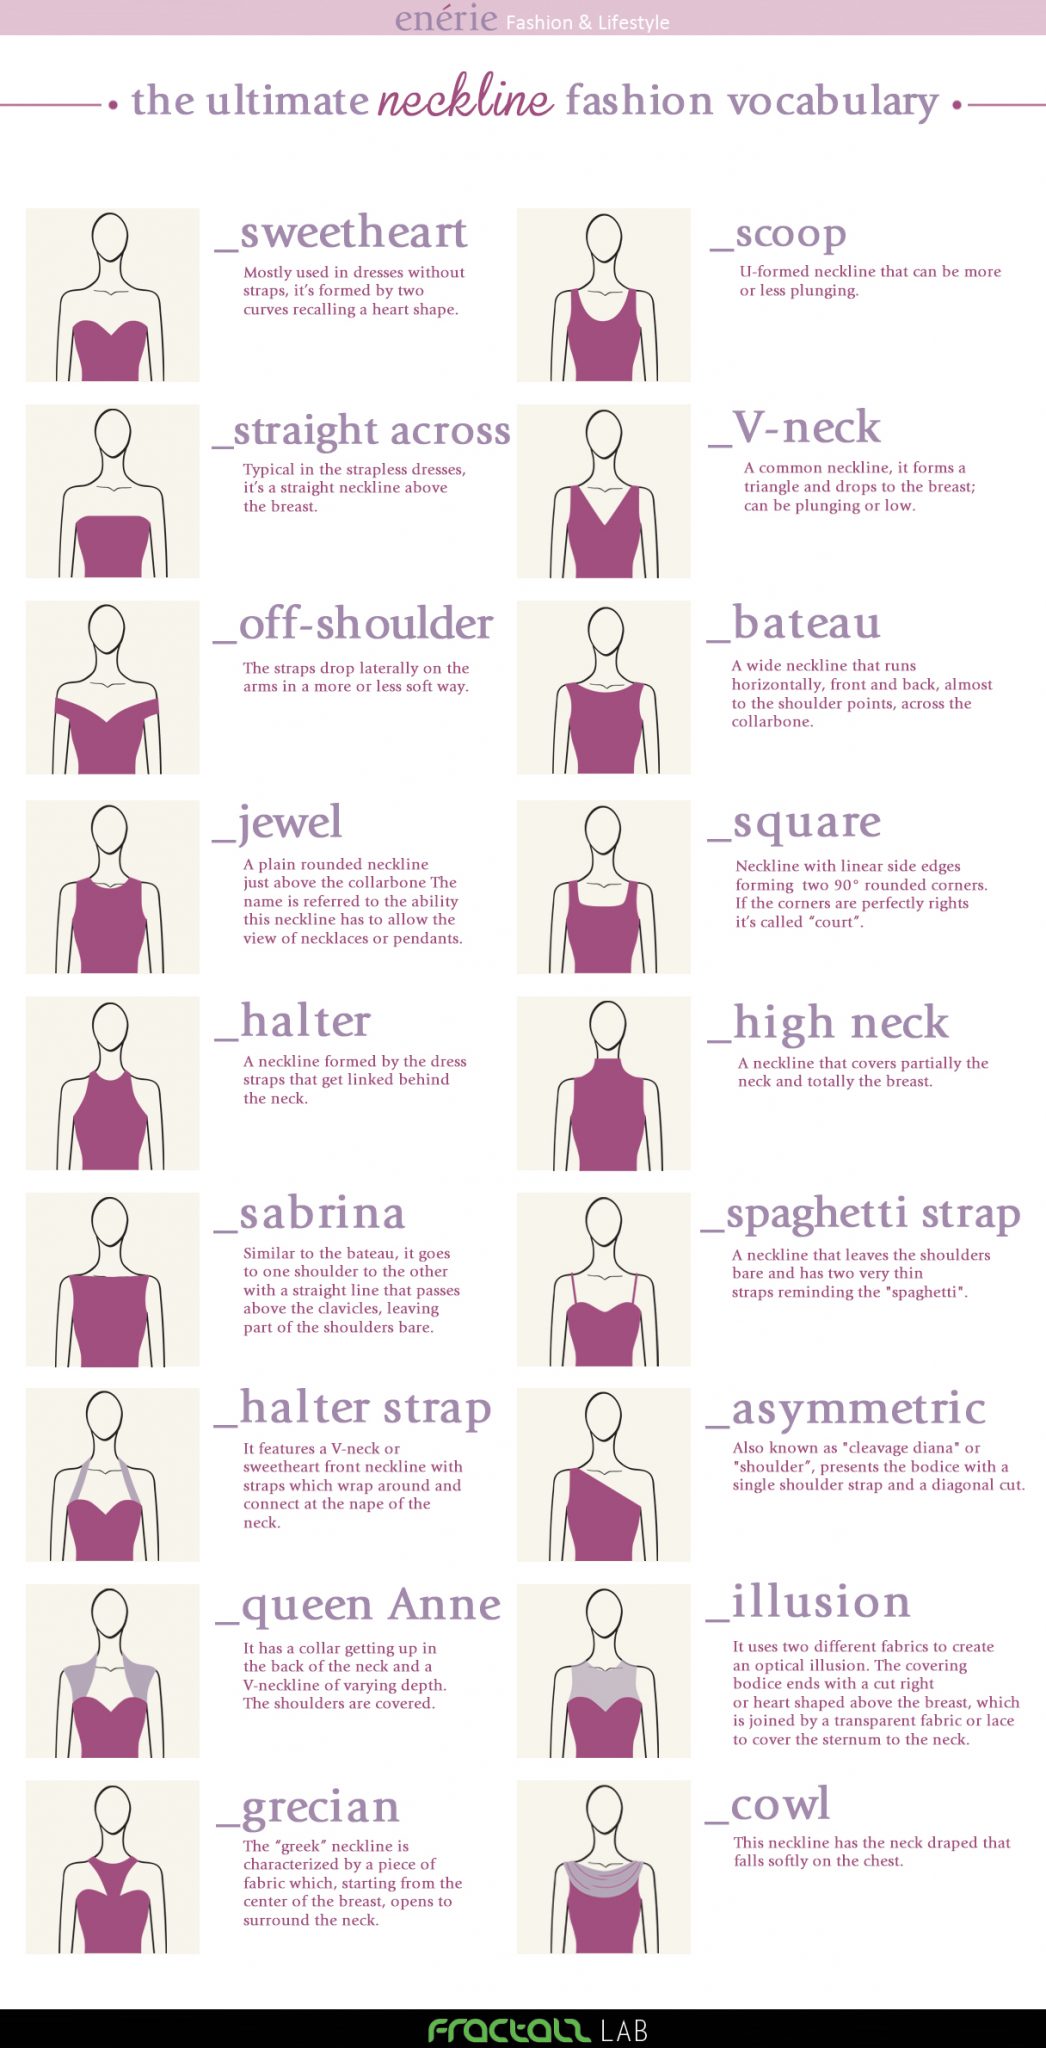 The Ultimate Neckline Fashion Vocabulary - 30 Useful Fashion